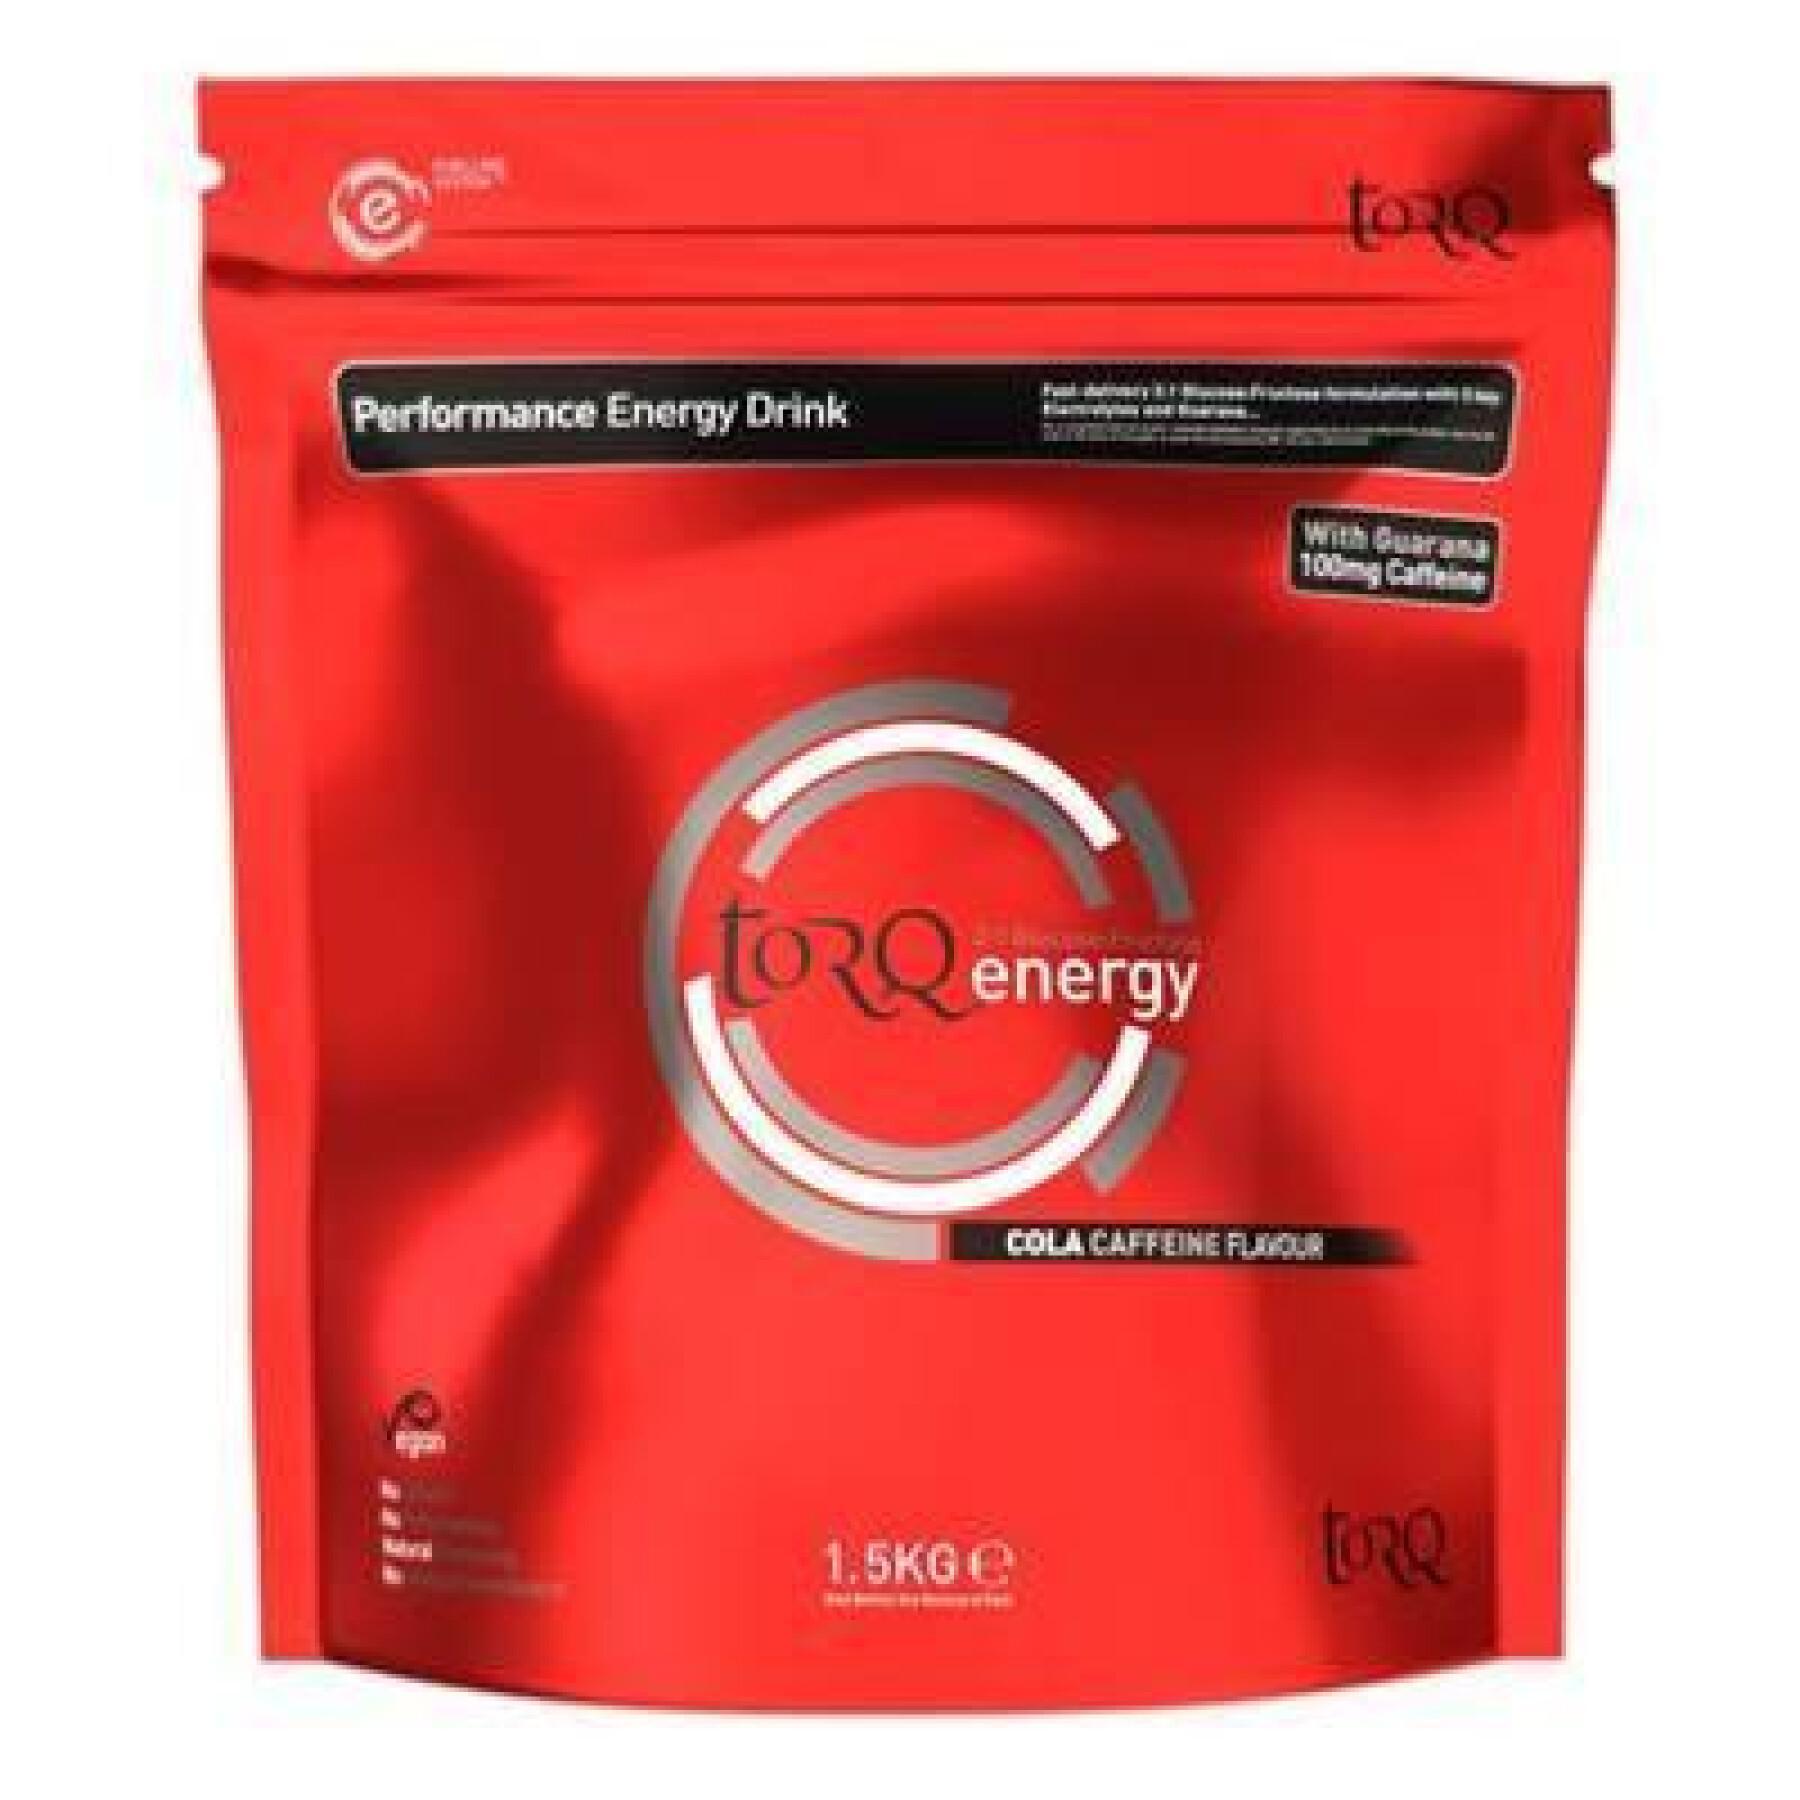 Caffeinated energy drink TORQ (x2)